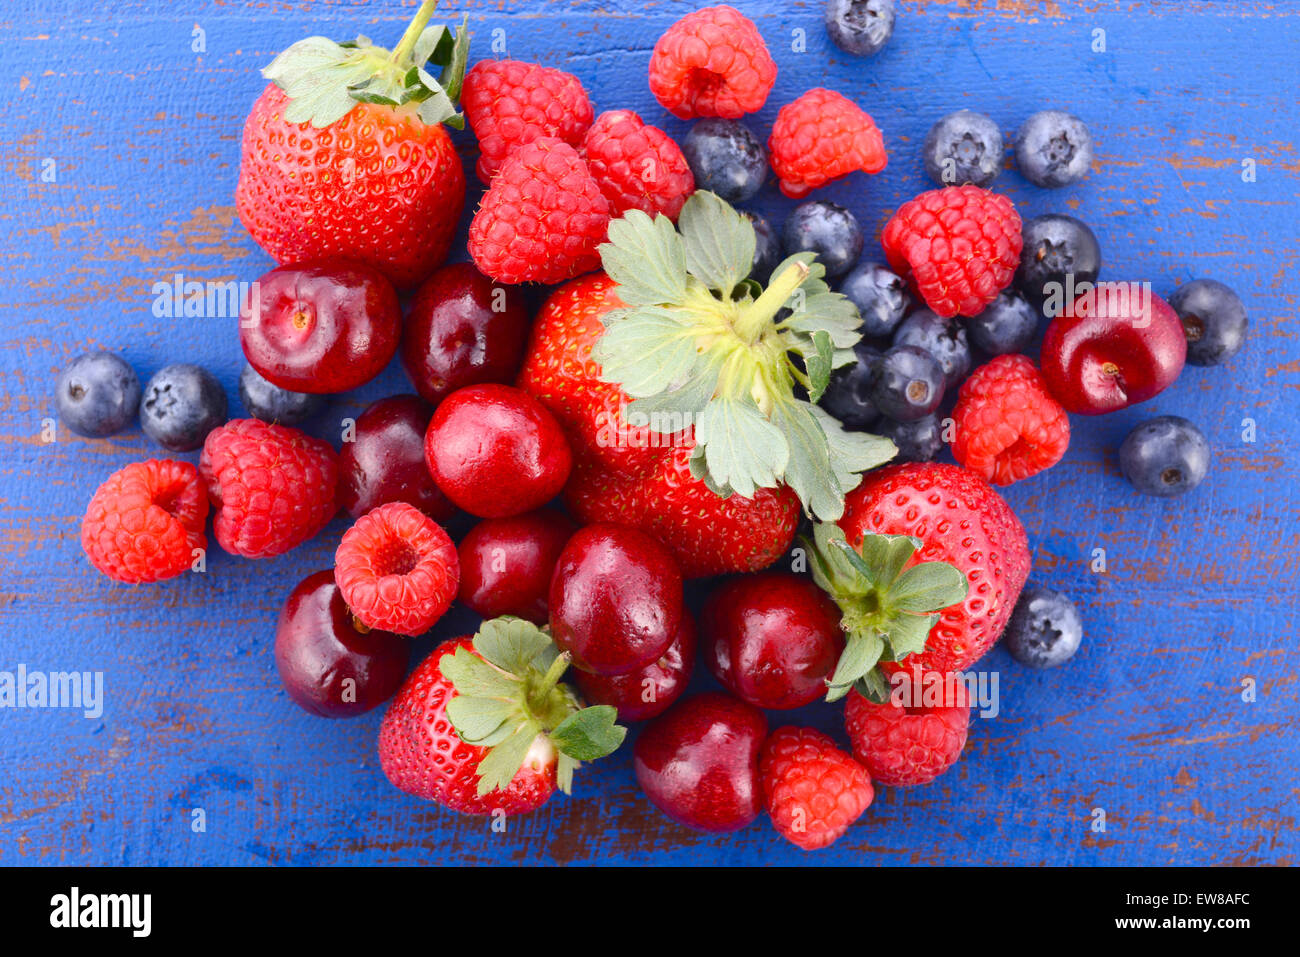 Summer fruit with raspberries, blueberries, strawberries and cherries on dark blue wood table. Stock Photo